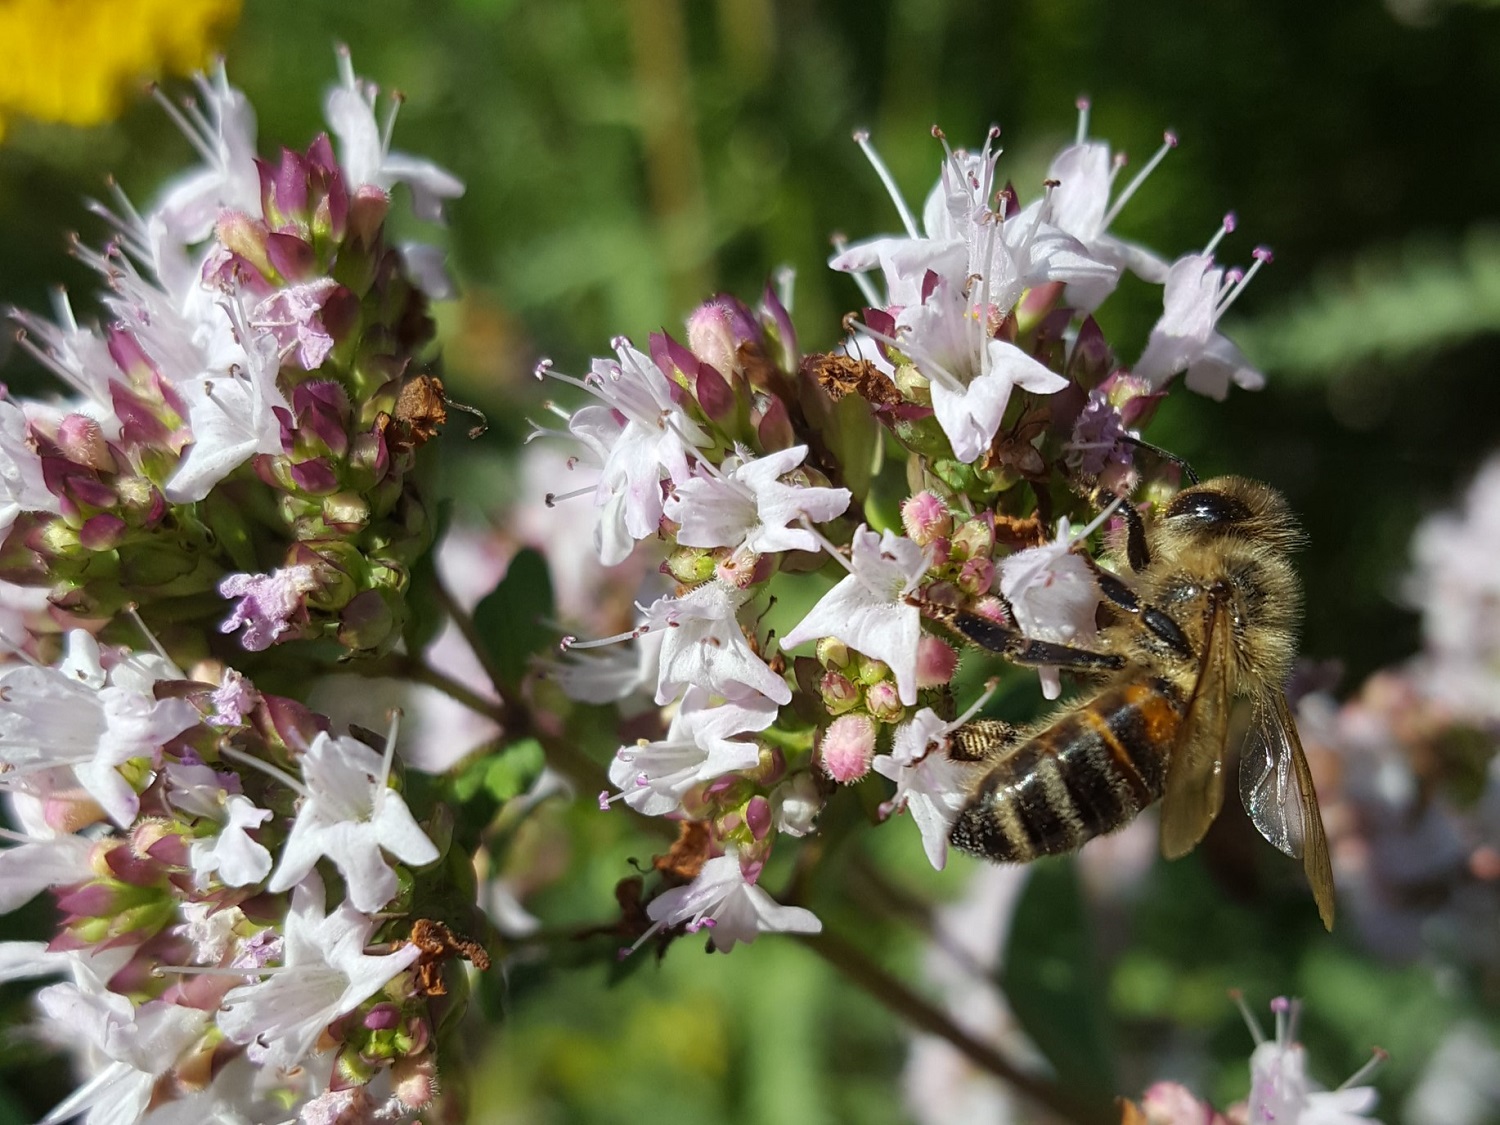 Bee on wild marjoram. Credit: PAN UK